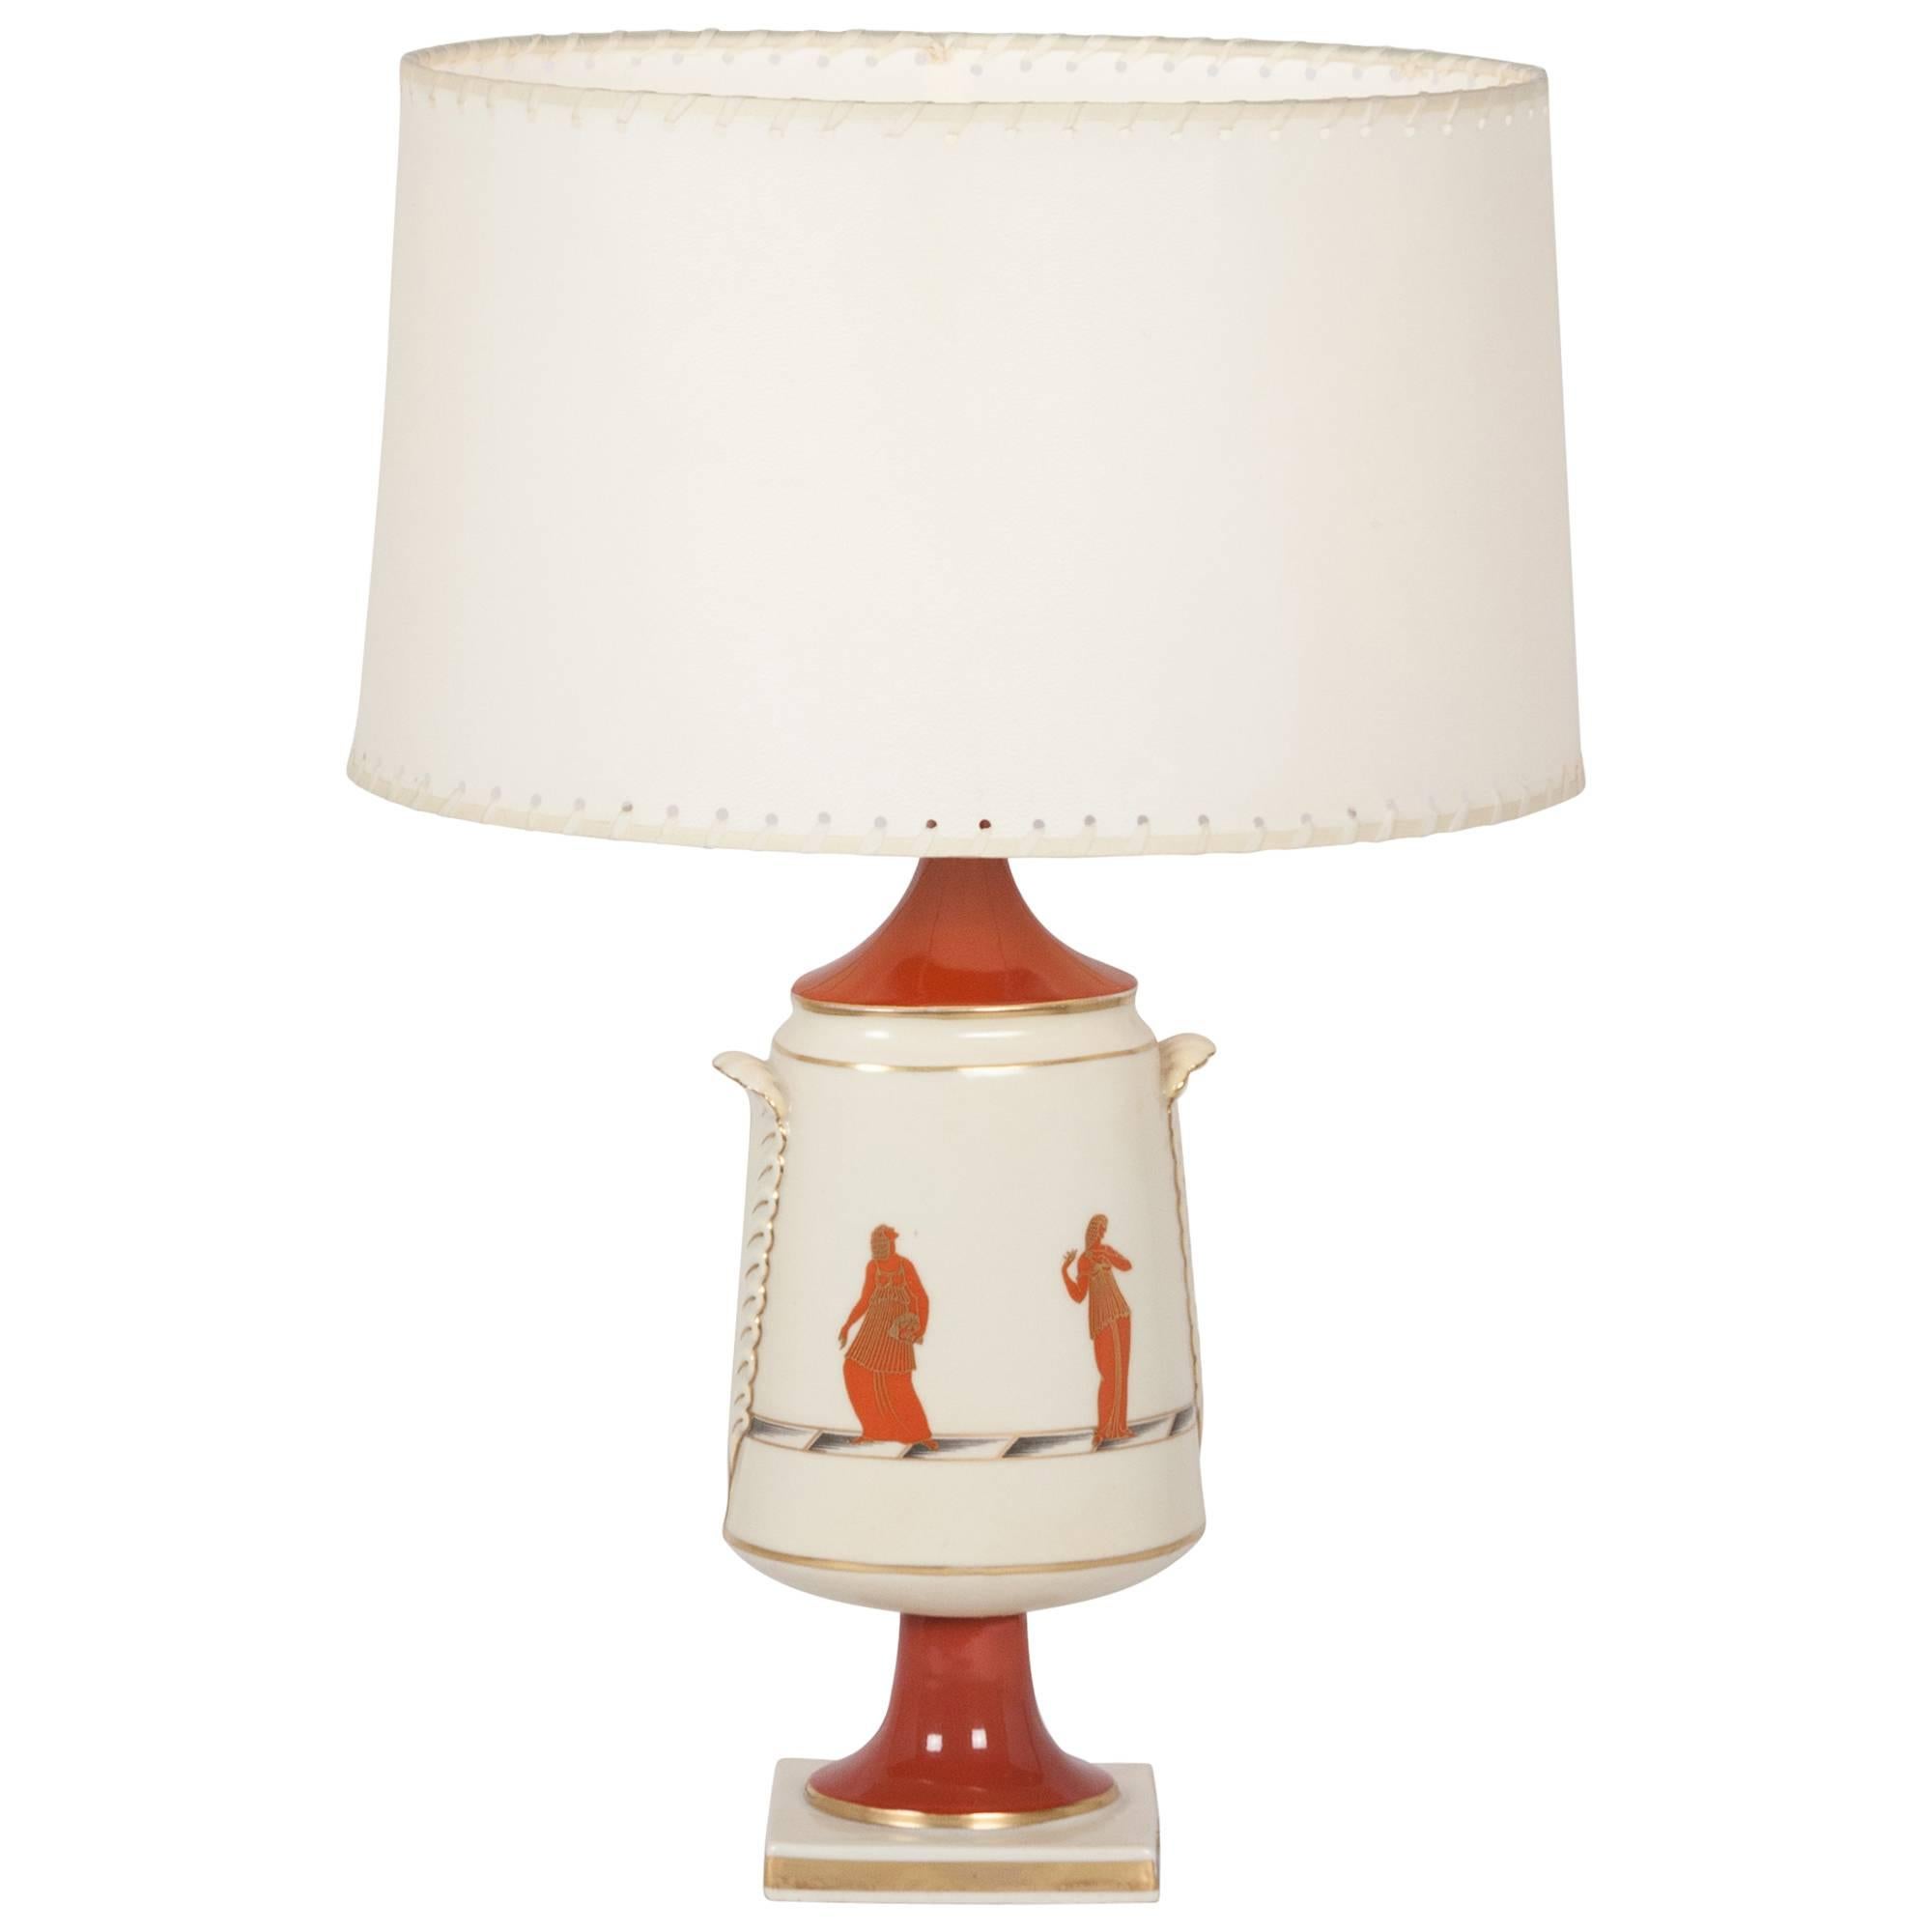 Gio Ponti for Ginori Table Lamp, Italian, 1920s For Sale